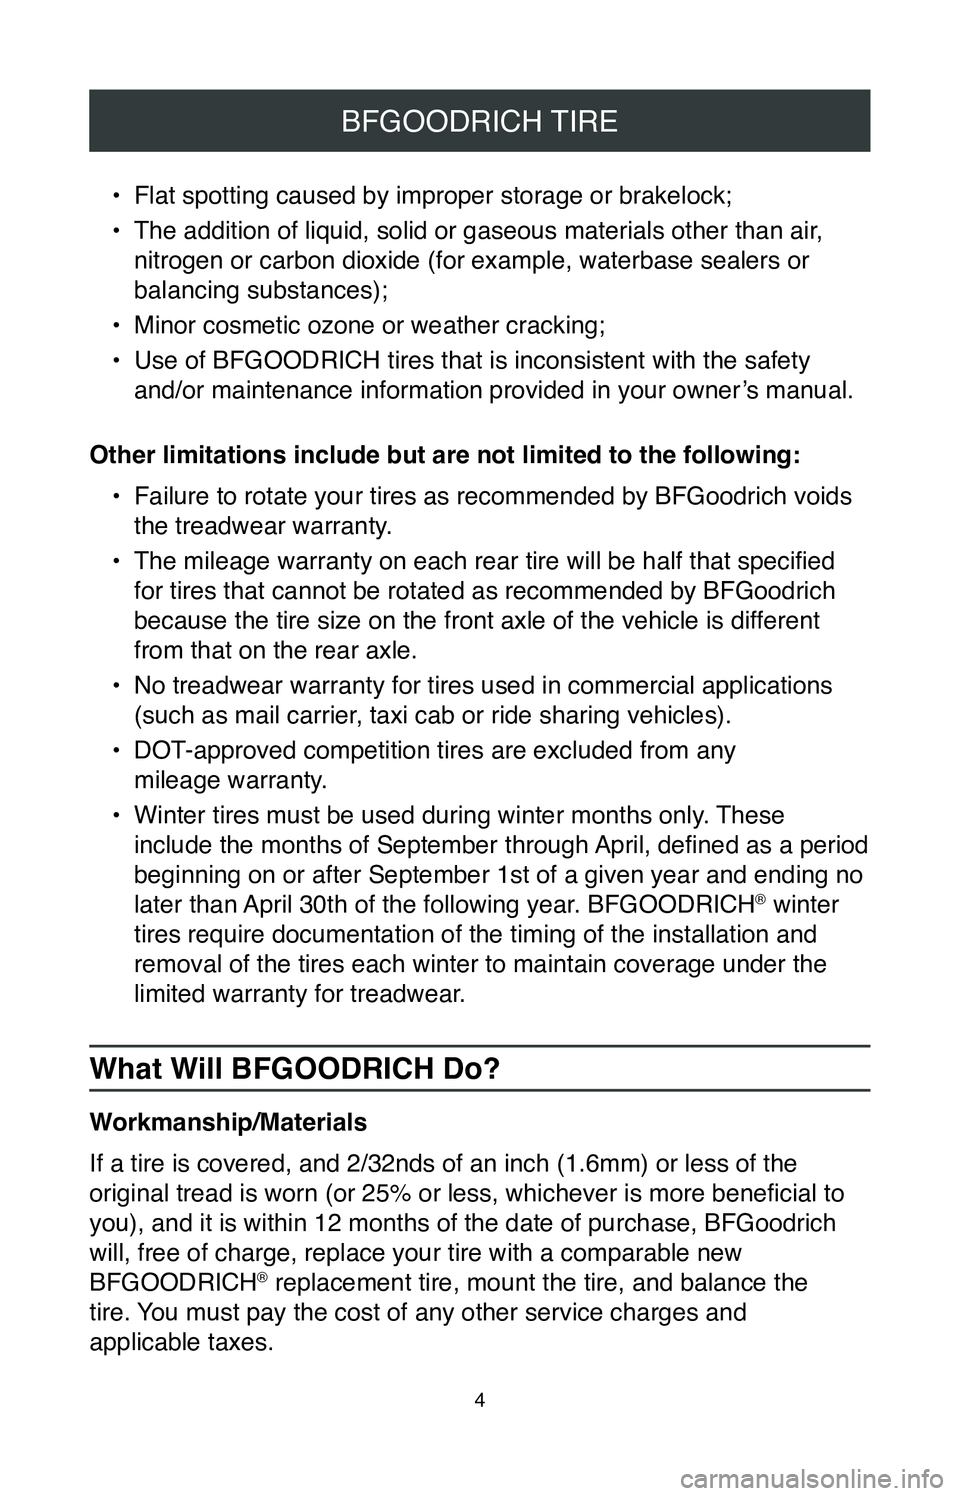 TOYOTA PRIUS 2020  Warranties & Maintenance Guides (in English) 4
BFGOODRICH TIRE
